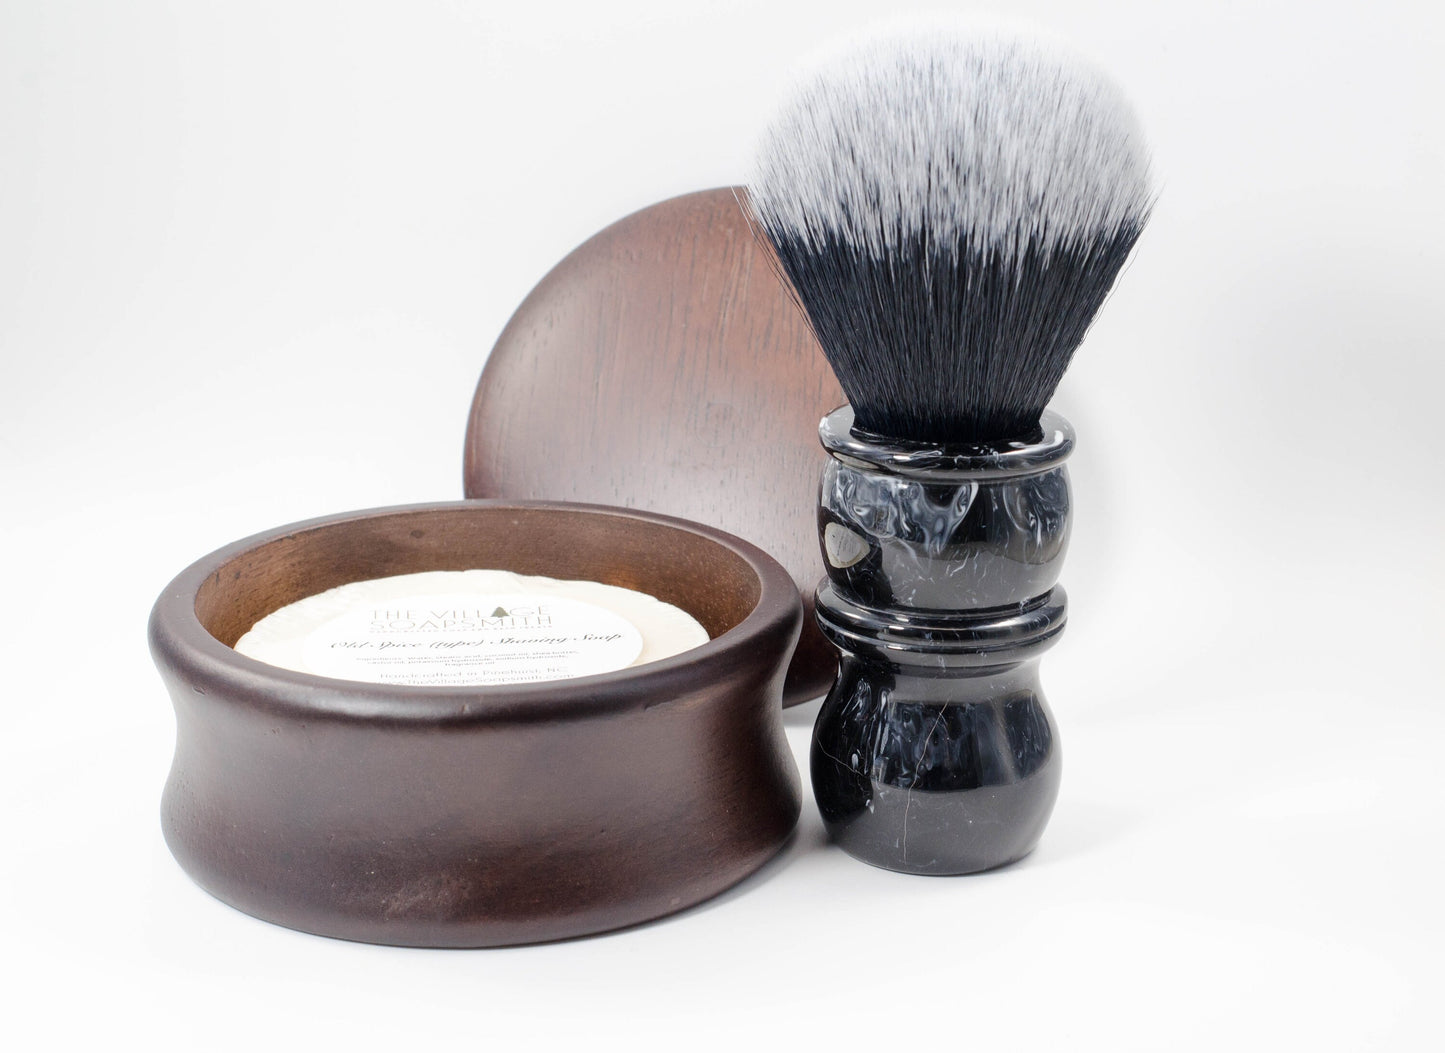 Old Spice Shaving Soap gift set